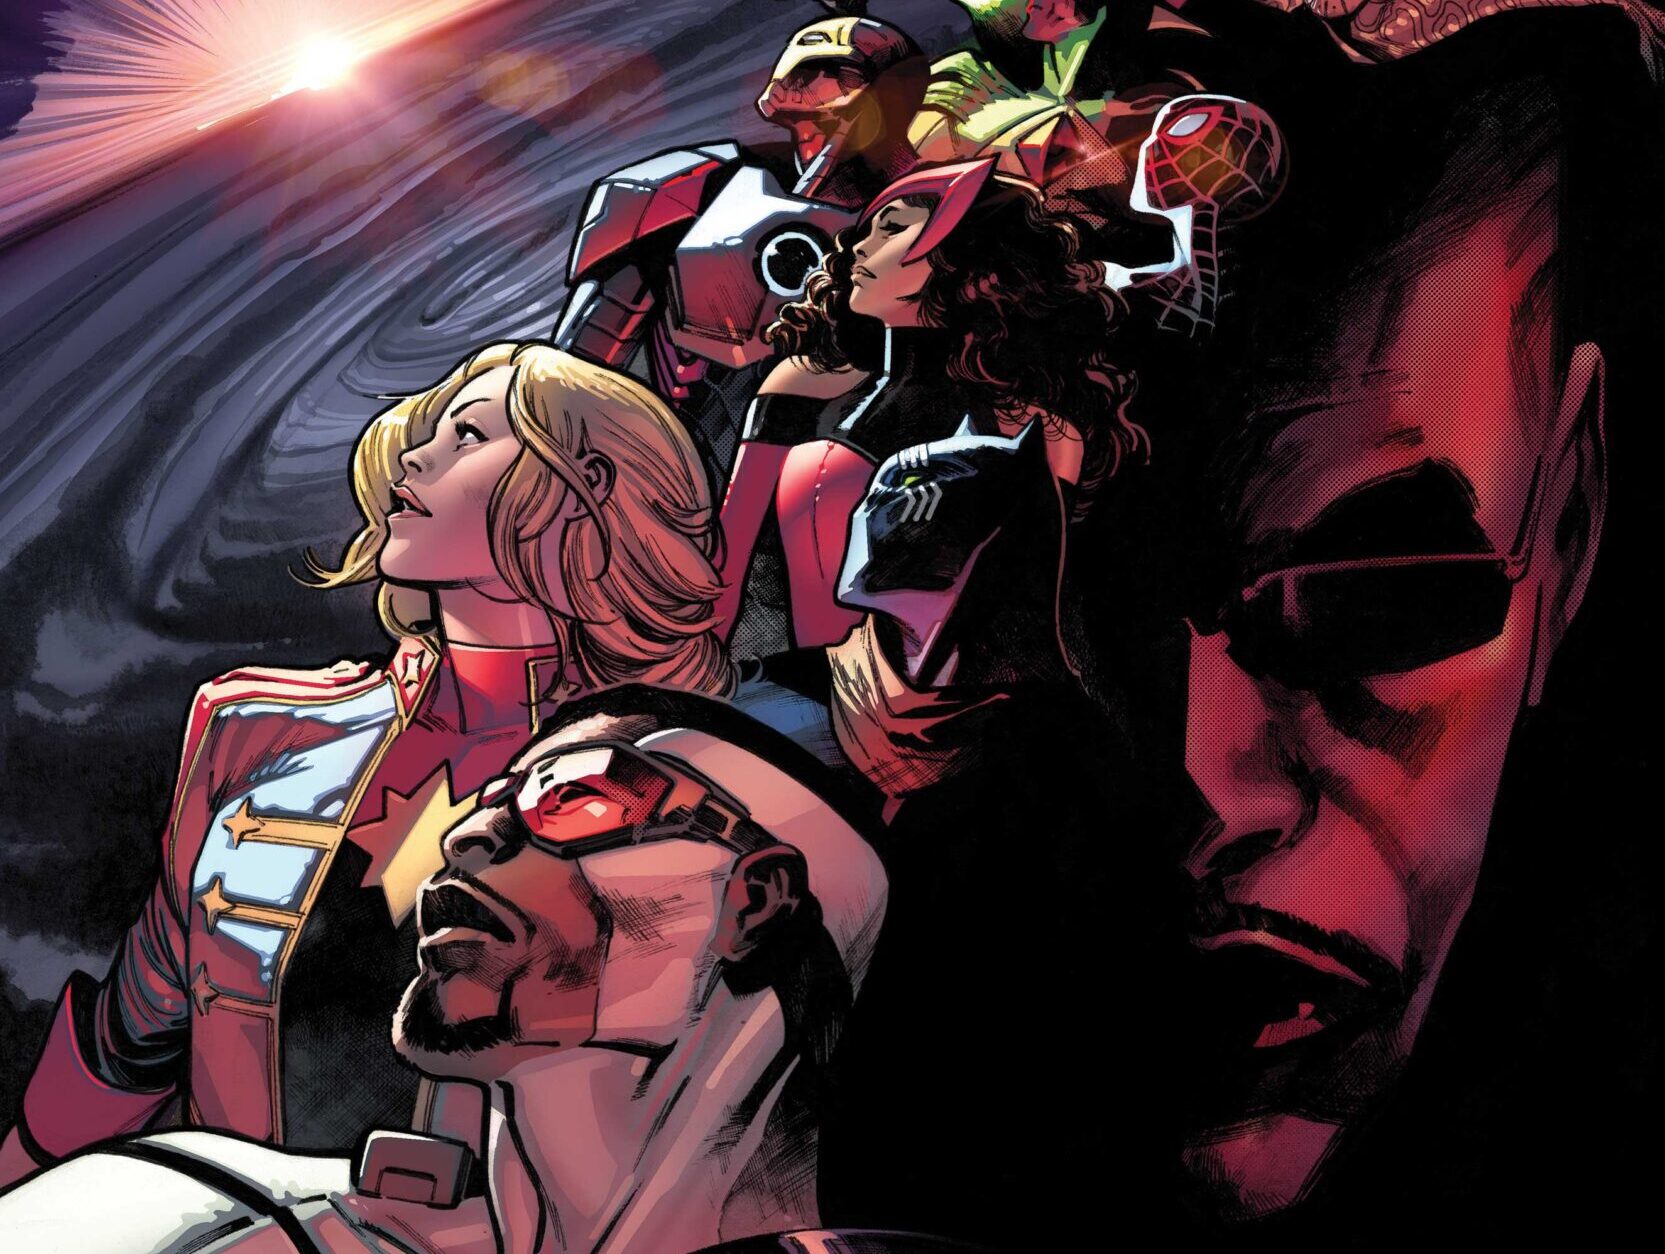 Marvel’s Latest Crossover Event, BLOOD HUNT, Promises A Dark And Thrilling Saga